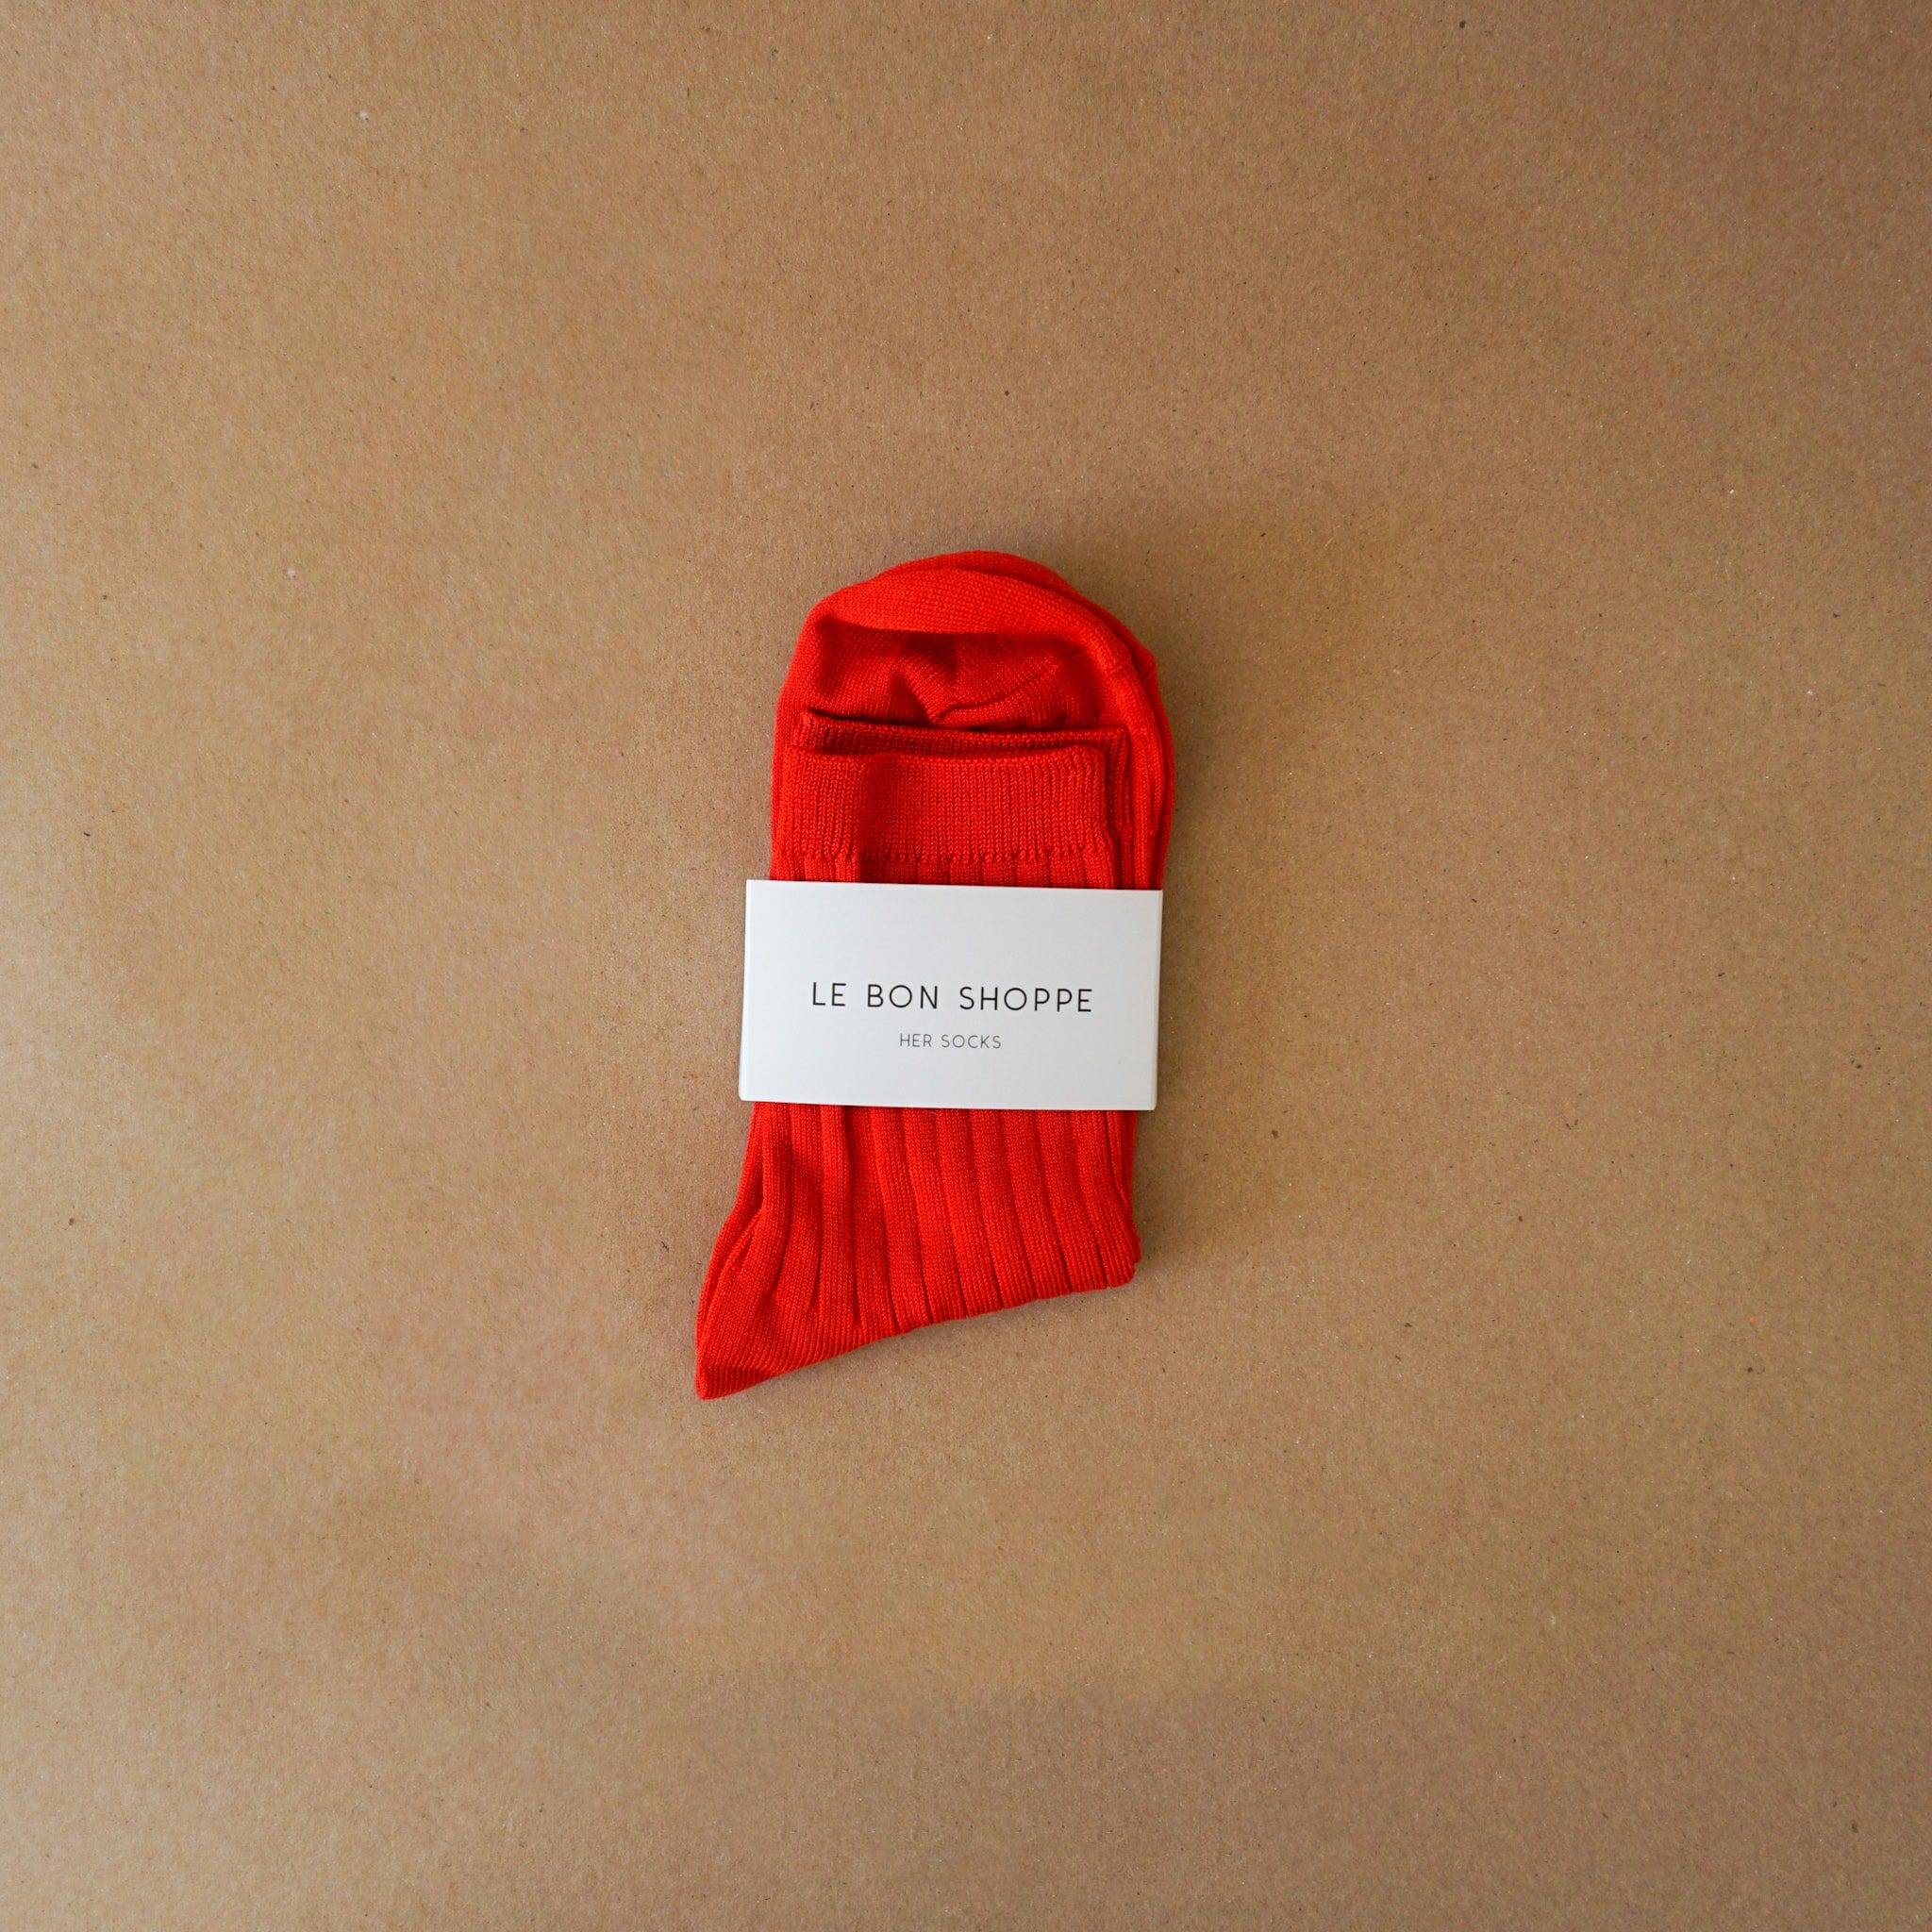 Le Bon Shoppe socks Classic Red Le Bon "Her" Socks